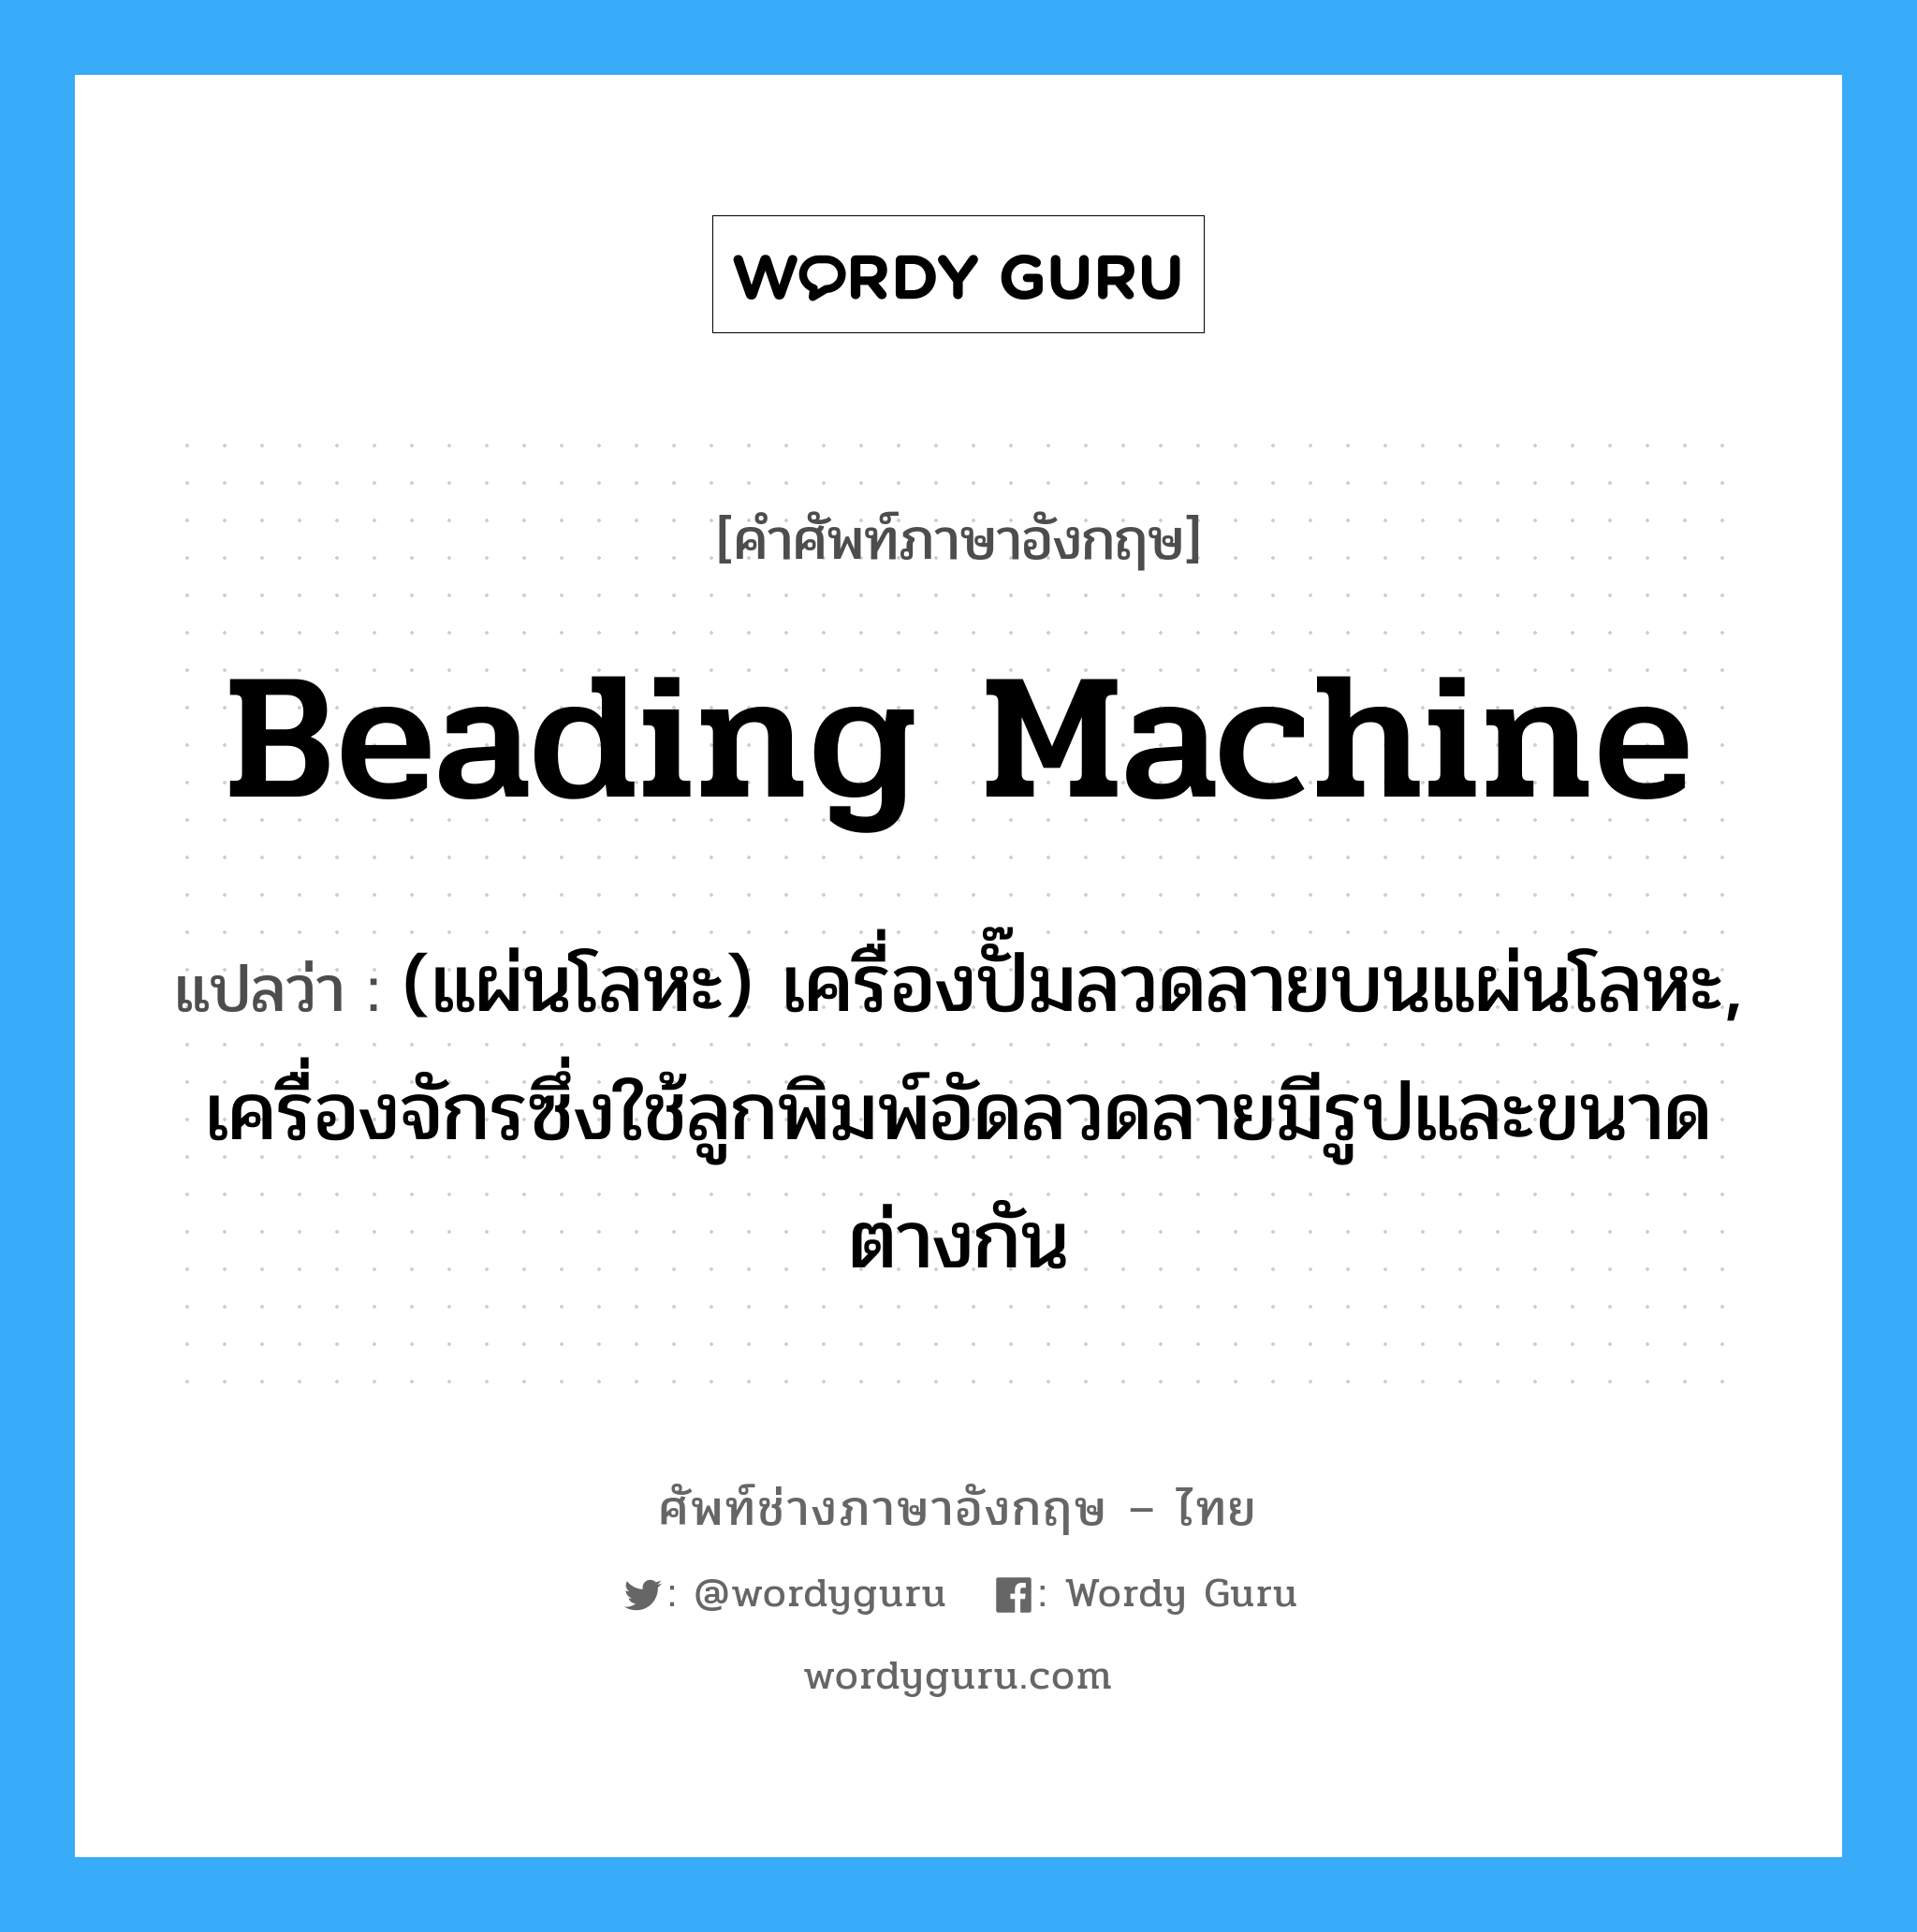 beading machine แปลว่า?, คำศัพท์ช่างภาษาอังกฤษ - ไทย beading machine คำศัพท์ภาษาอังกฤษ beading machine แปลว่า (แผ่นโลหะ) เครื่องปั๊มลวดลายบนแผ่นโลหะ, เครื่องจักรซึ่งใช้ลูกพิมพ์อัดลวดลายมีรูปและขนาดต่างกัน